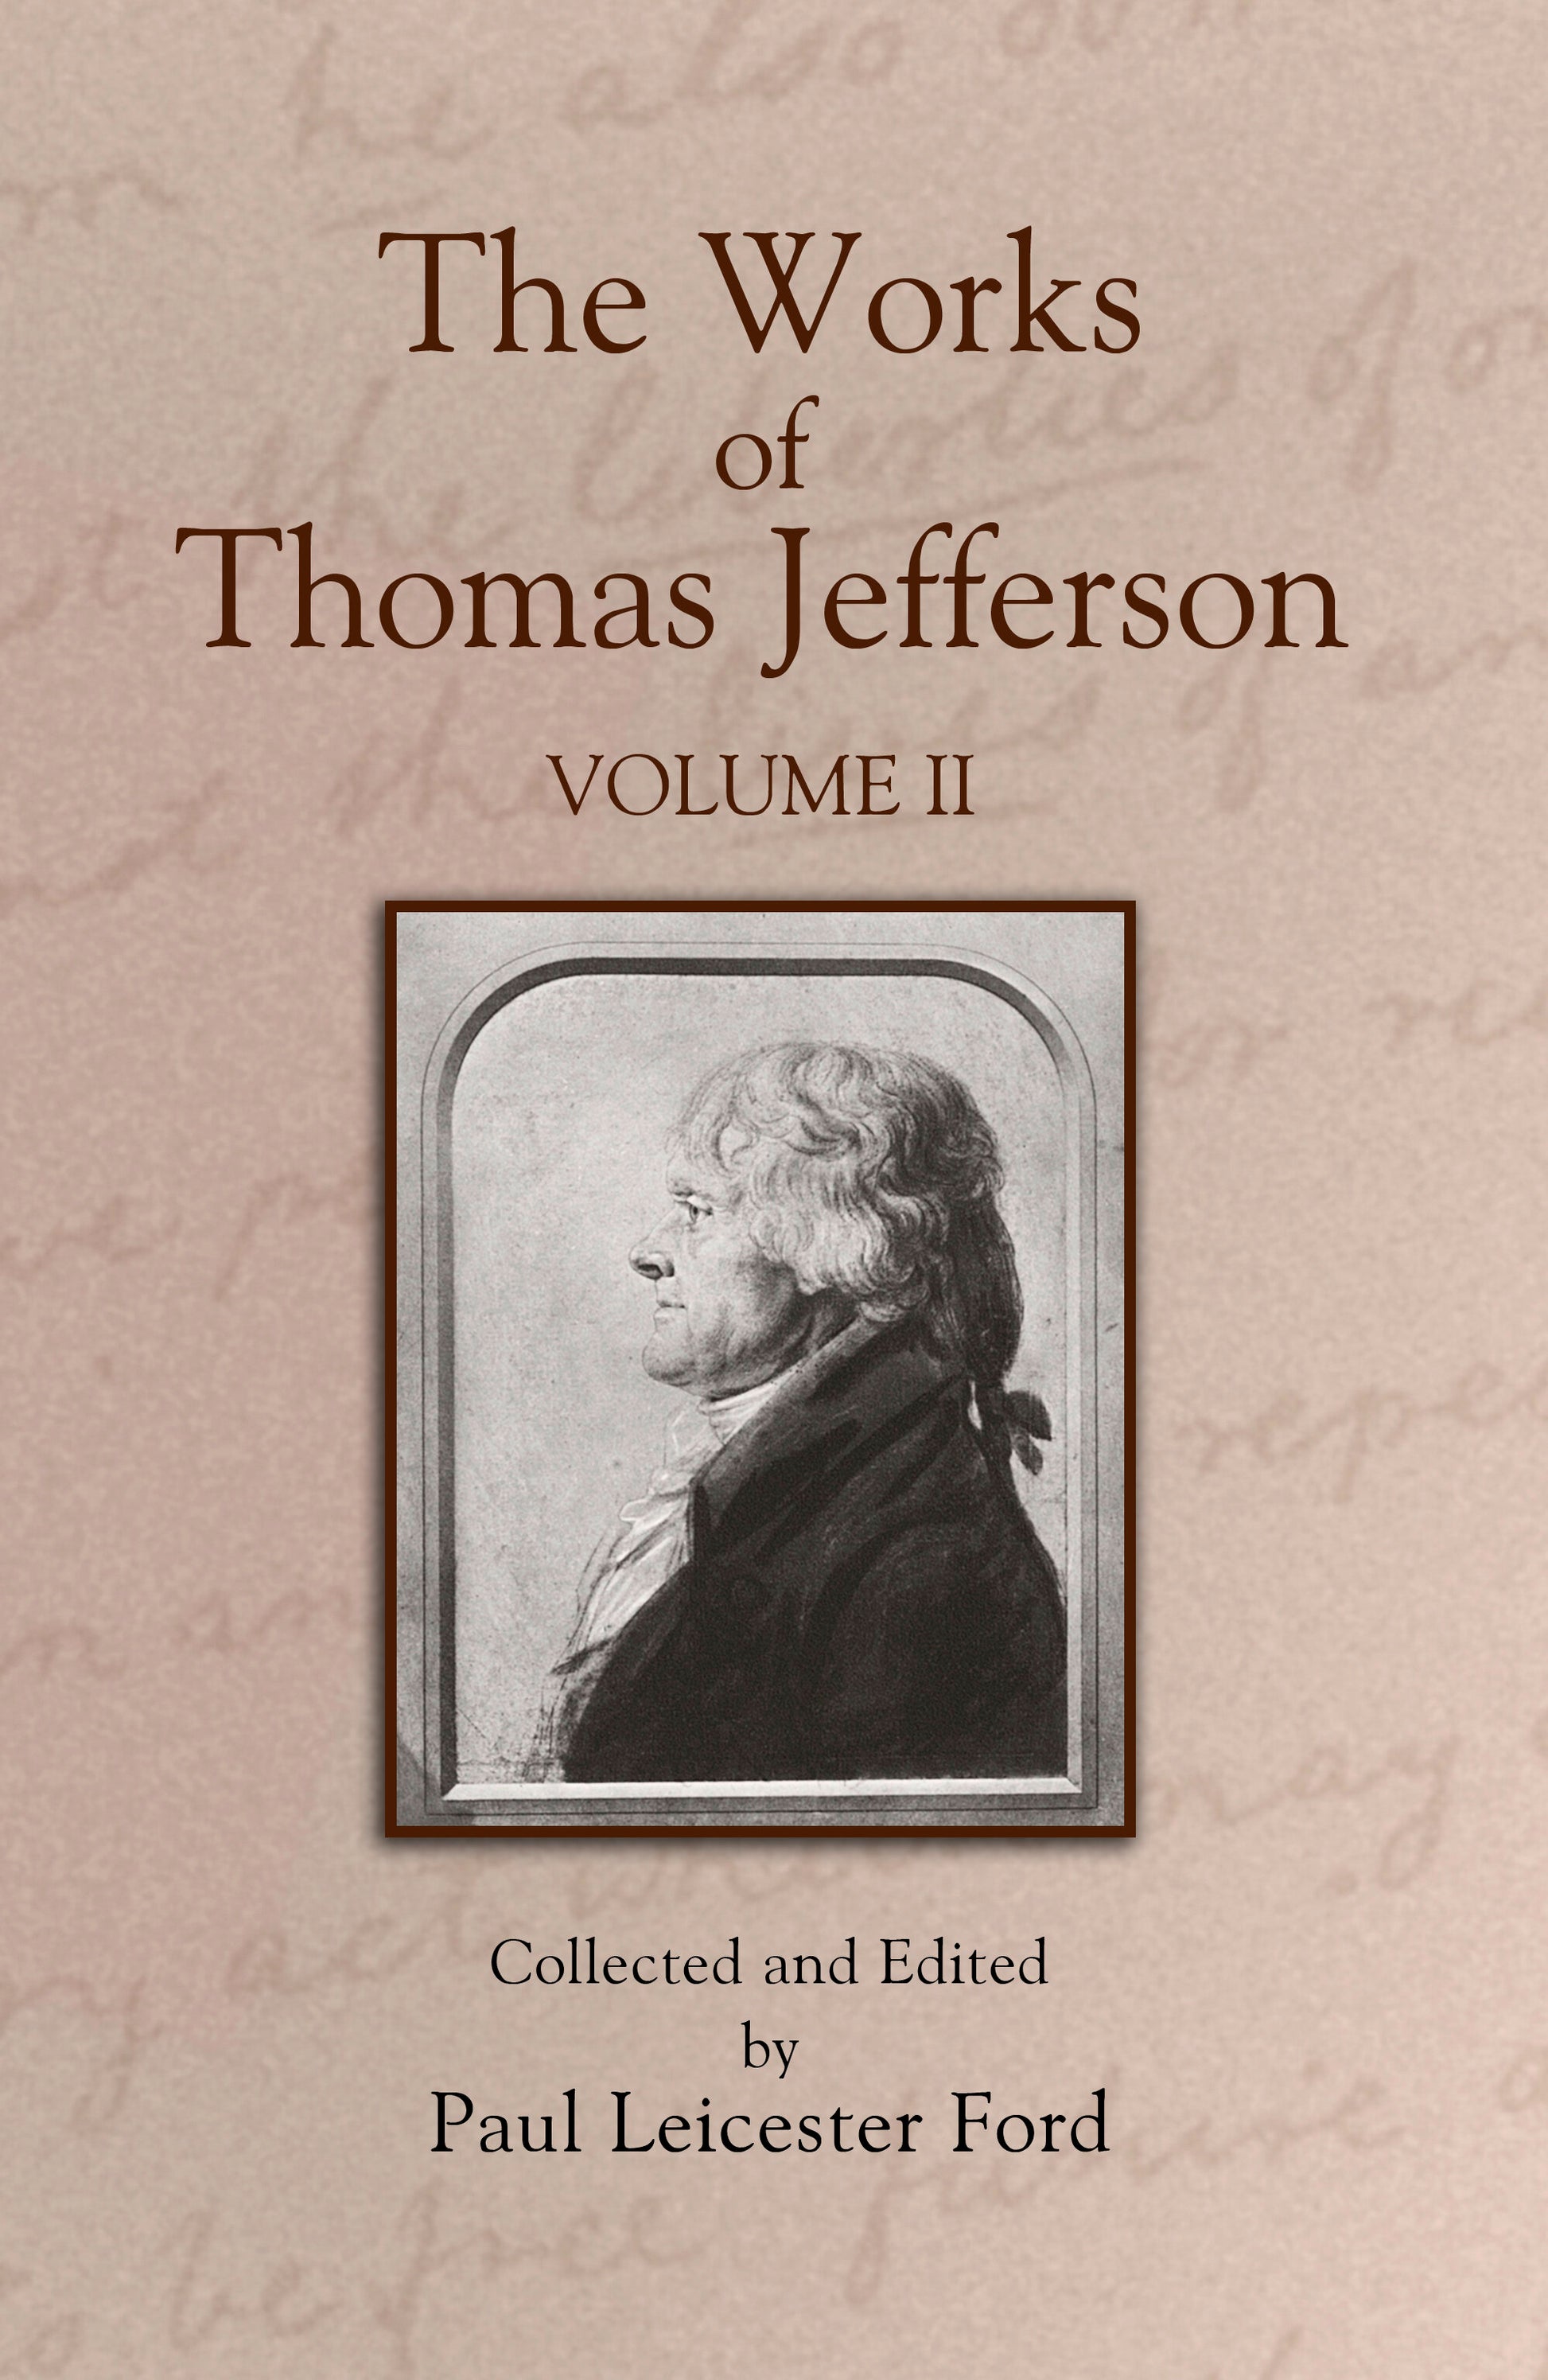 The Works of Thomas Jefferson: Volume II